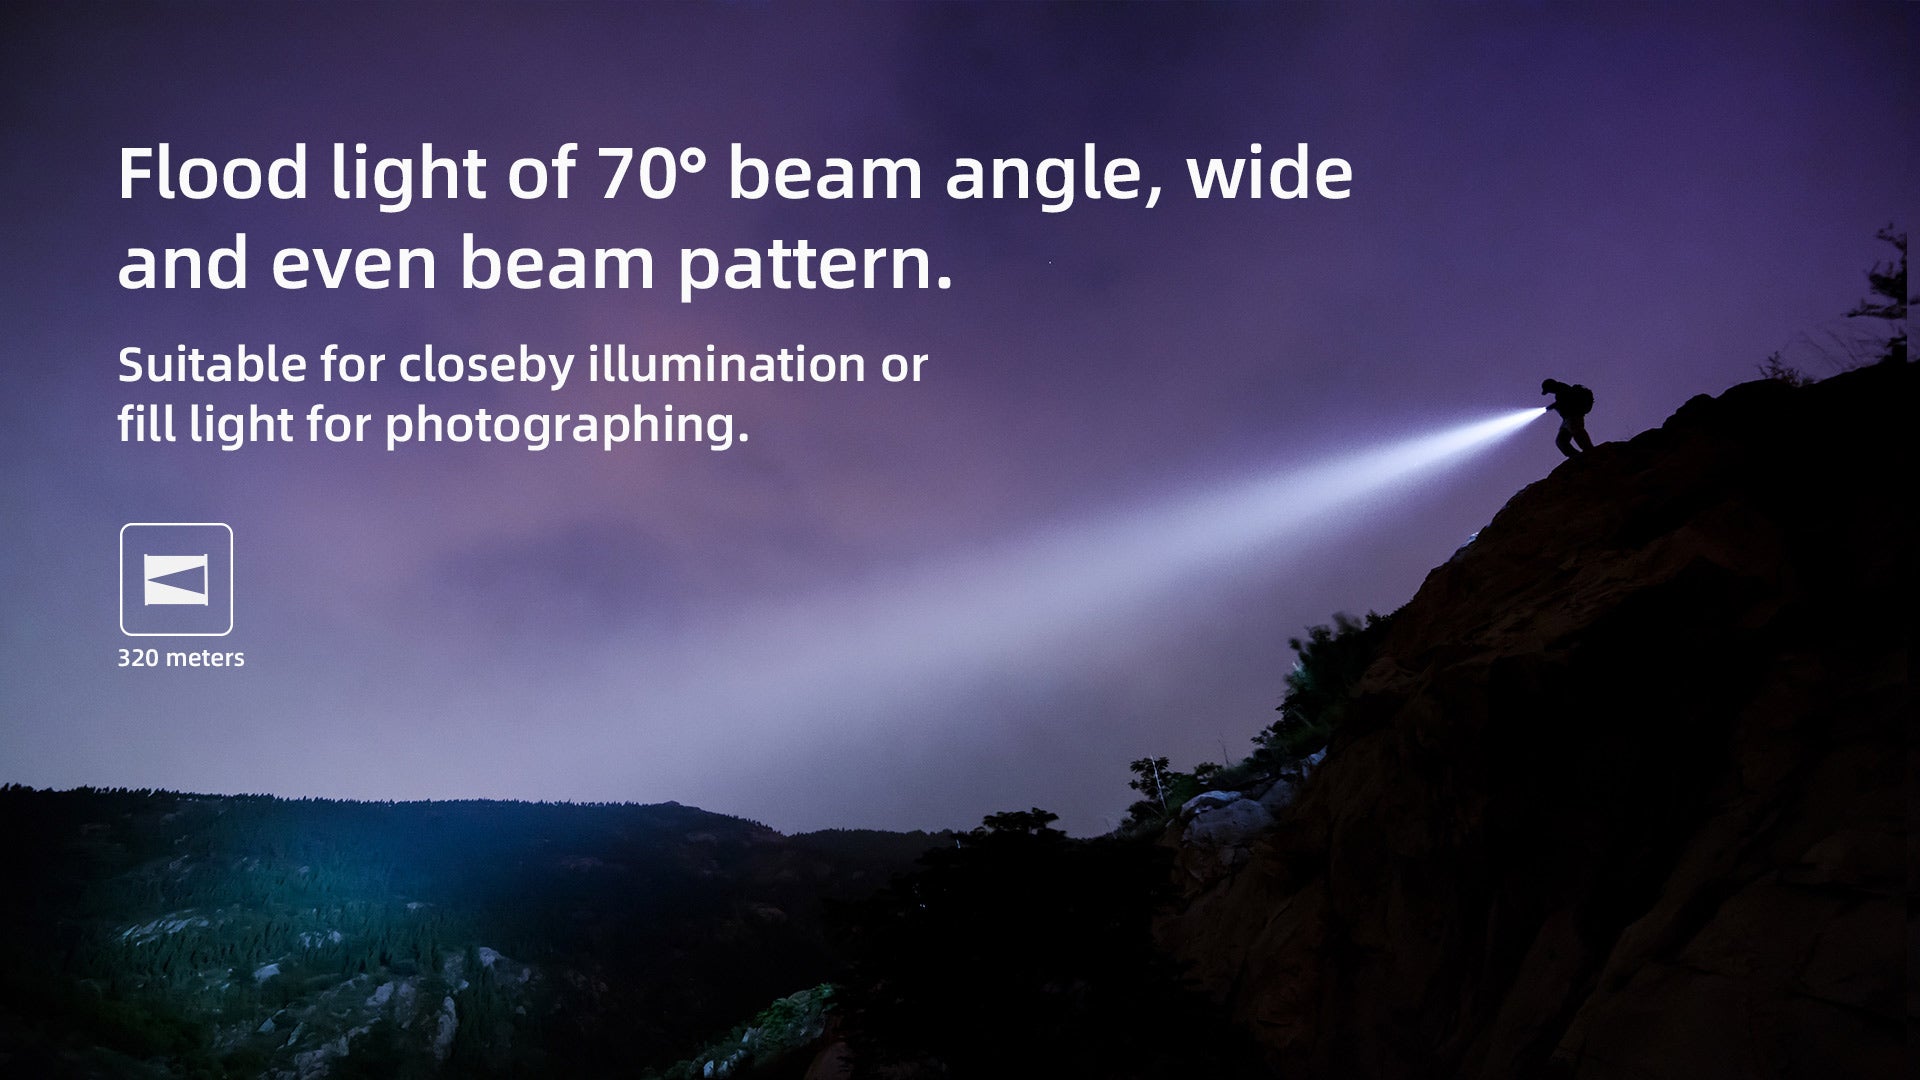 Flood light of 70° beam angle, wideand even beam pattern